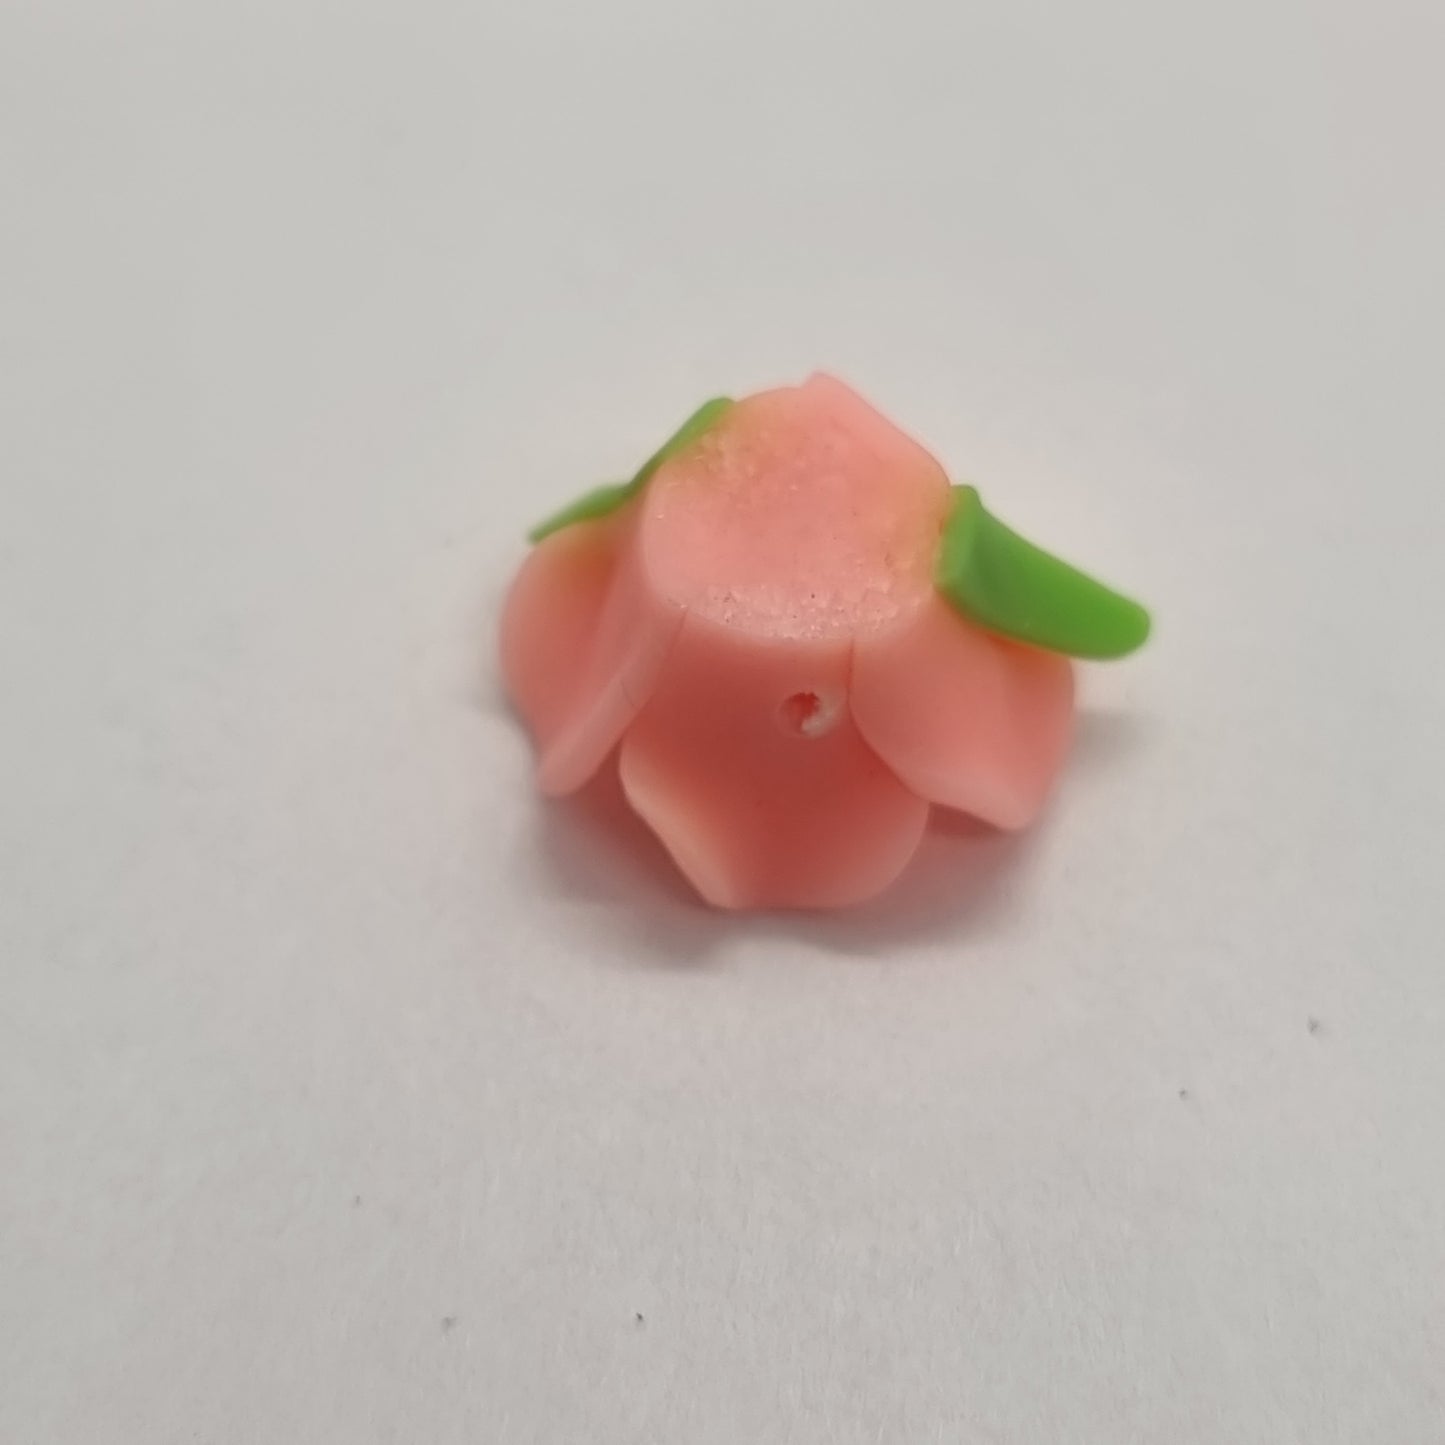 Handmade Polymer Clay Rose Bead